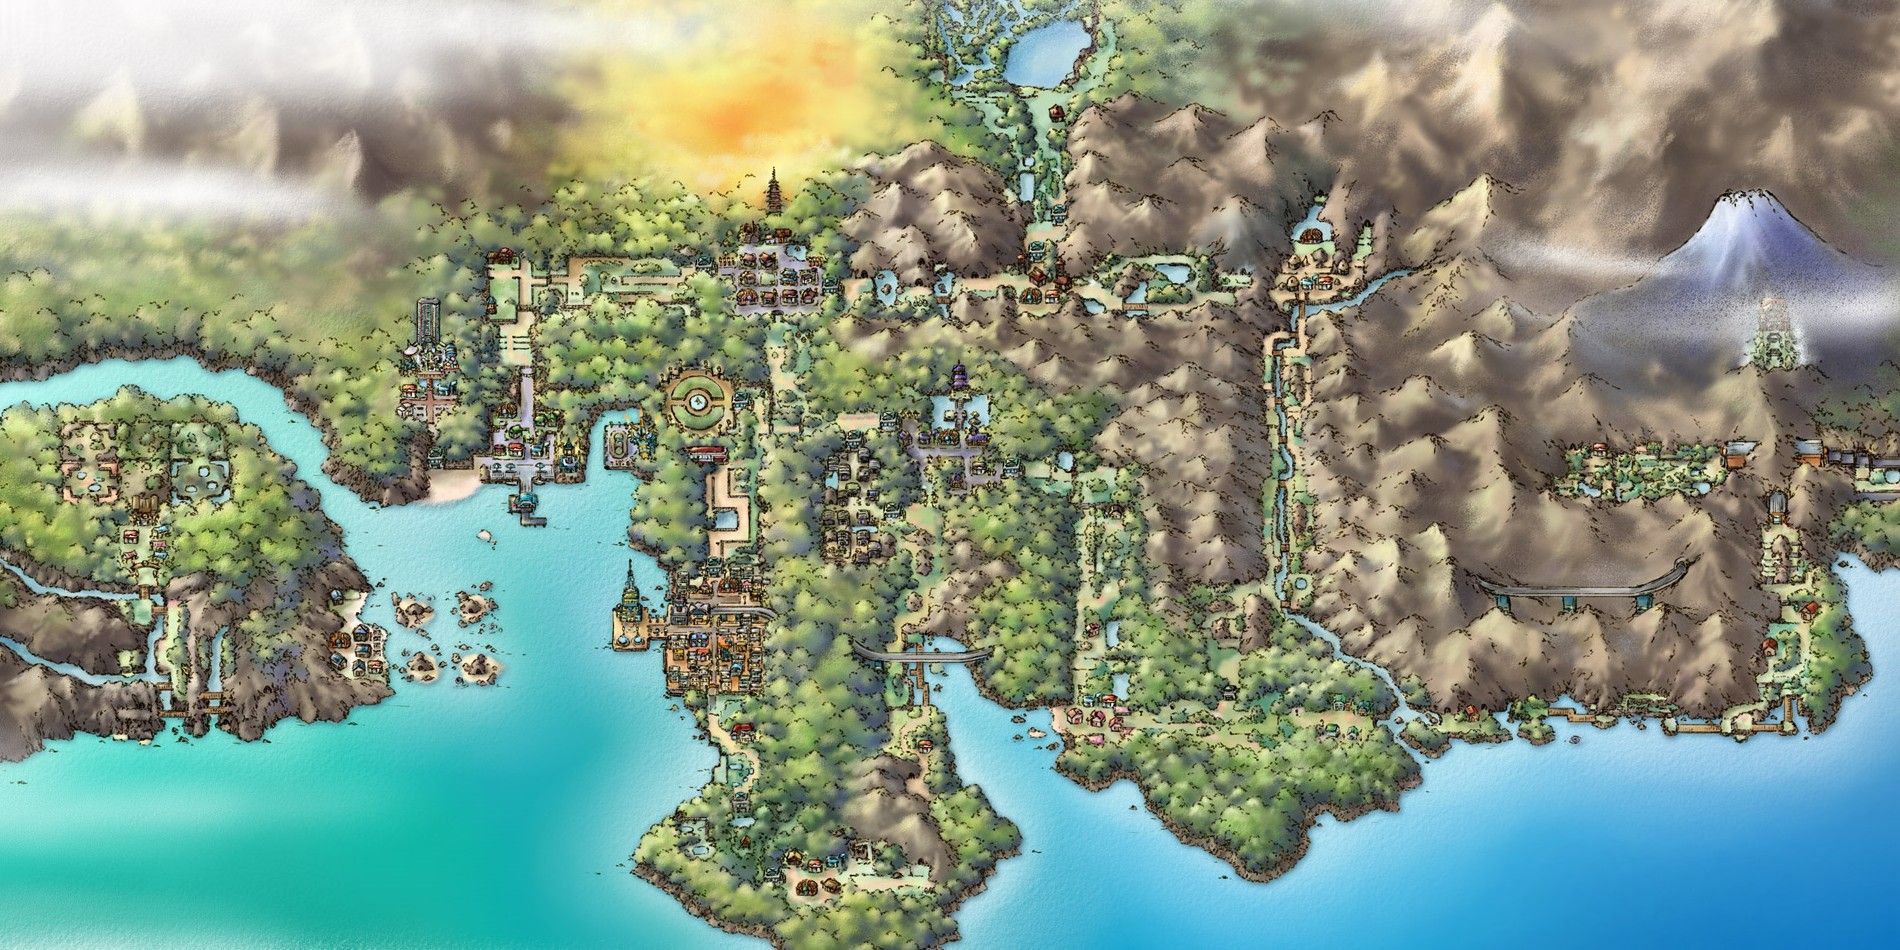 Defog HM Location in Pokémon BDSP